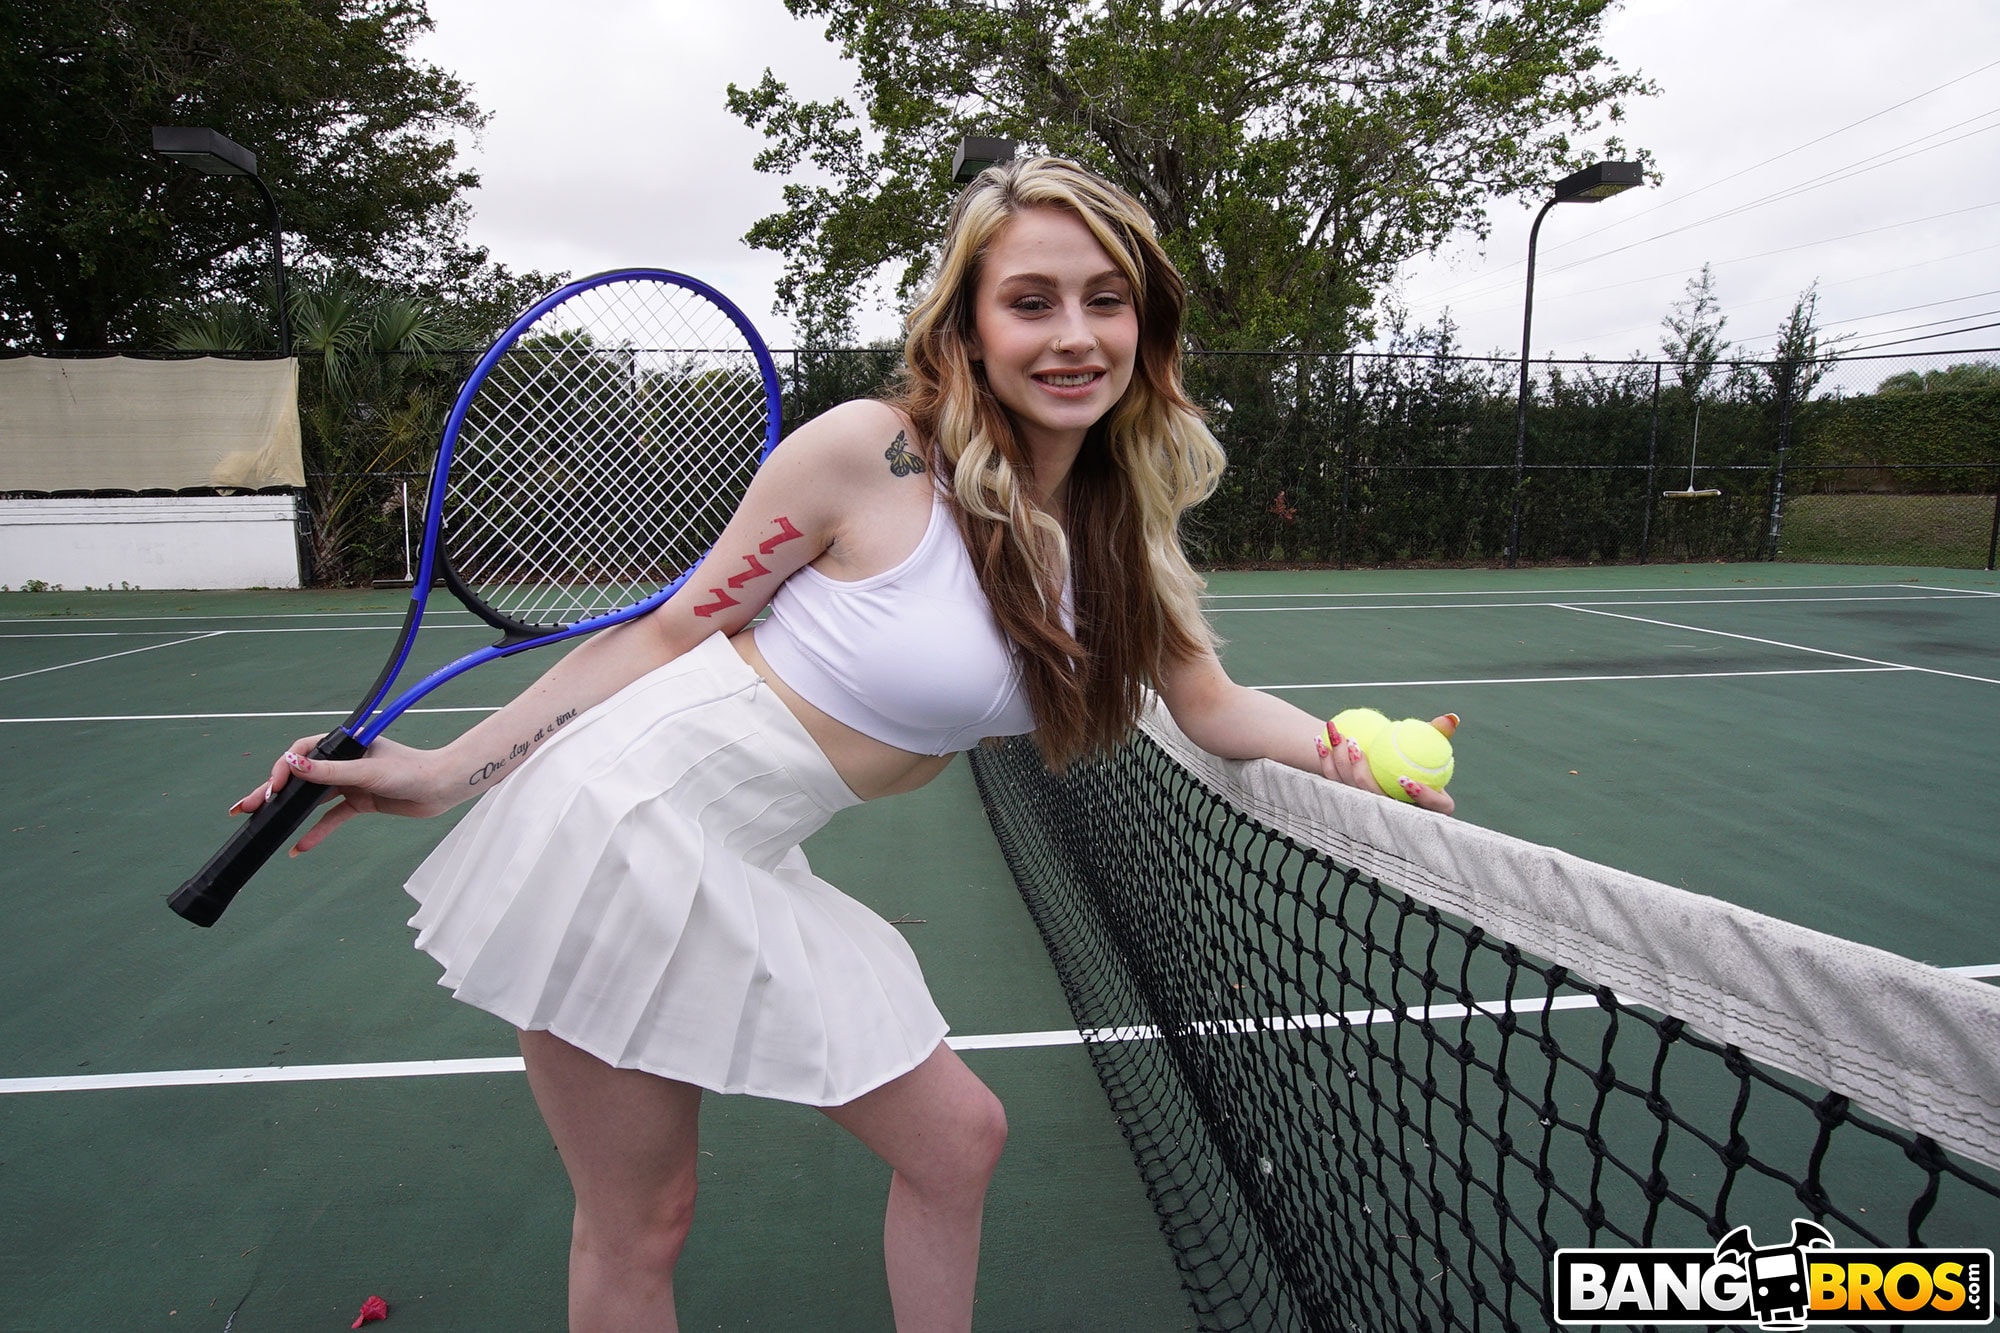 Bangbros 'Tennis Fuck Session' starring Kimberly Snow (Photo 18)